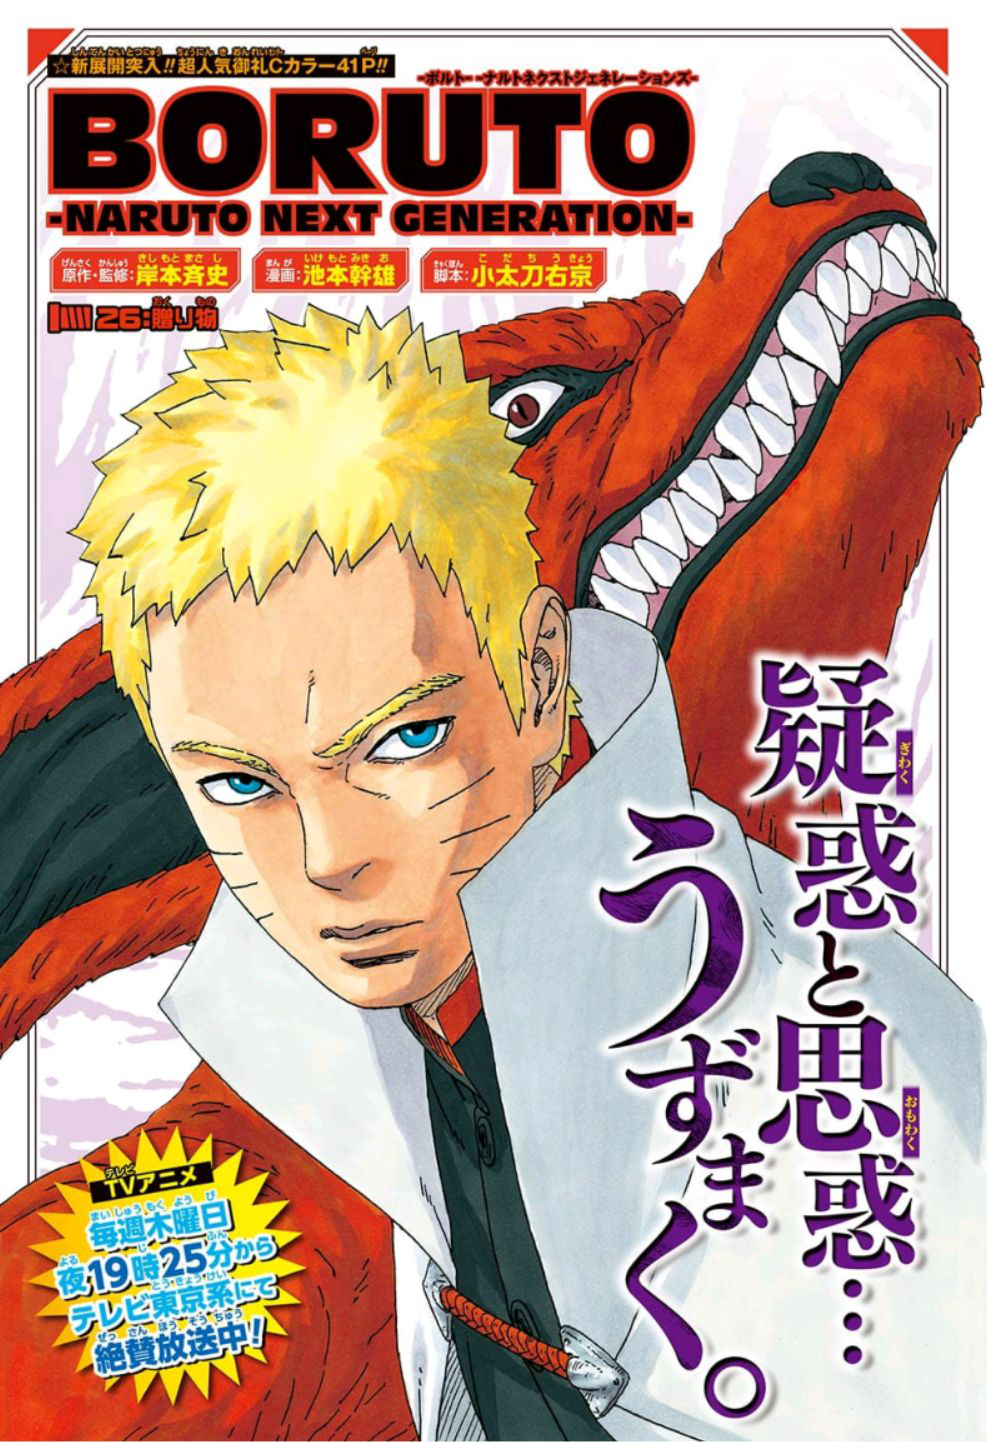 Naruto with black shirt like in the manga : r/Boruto